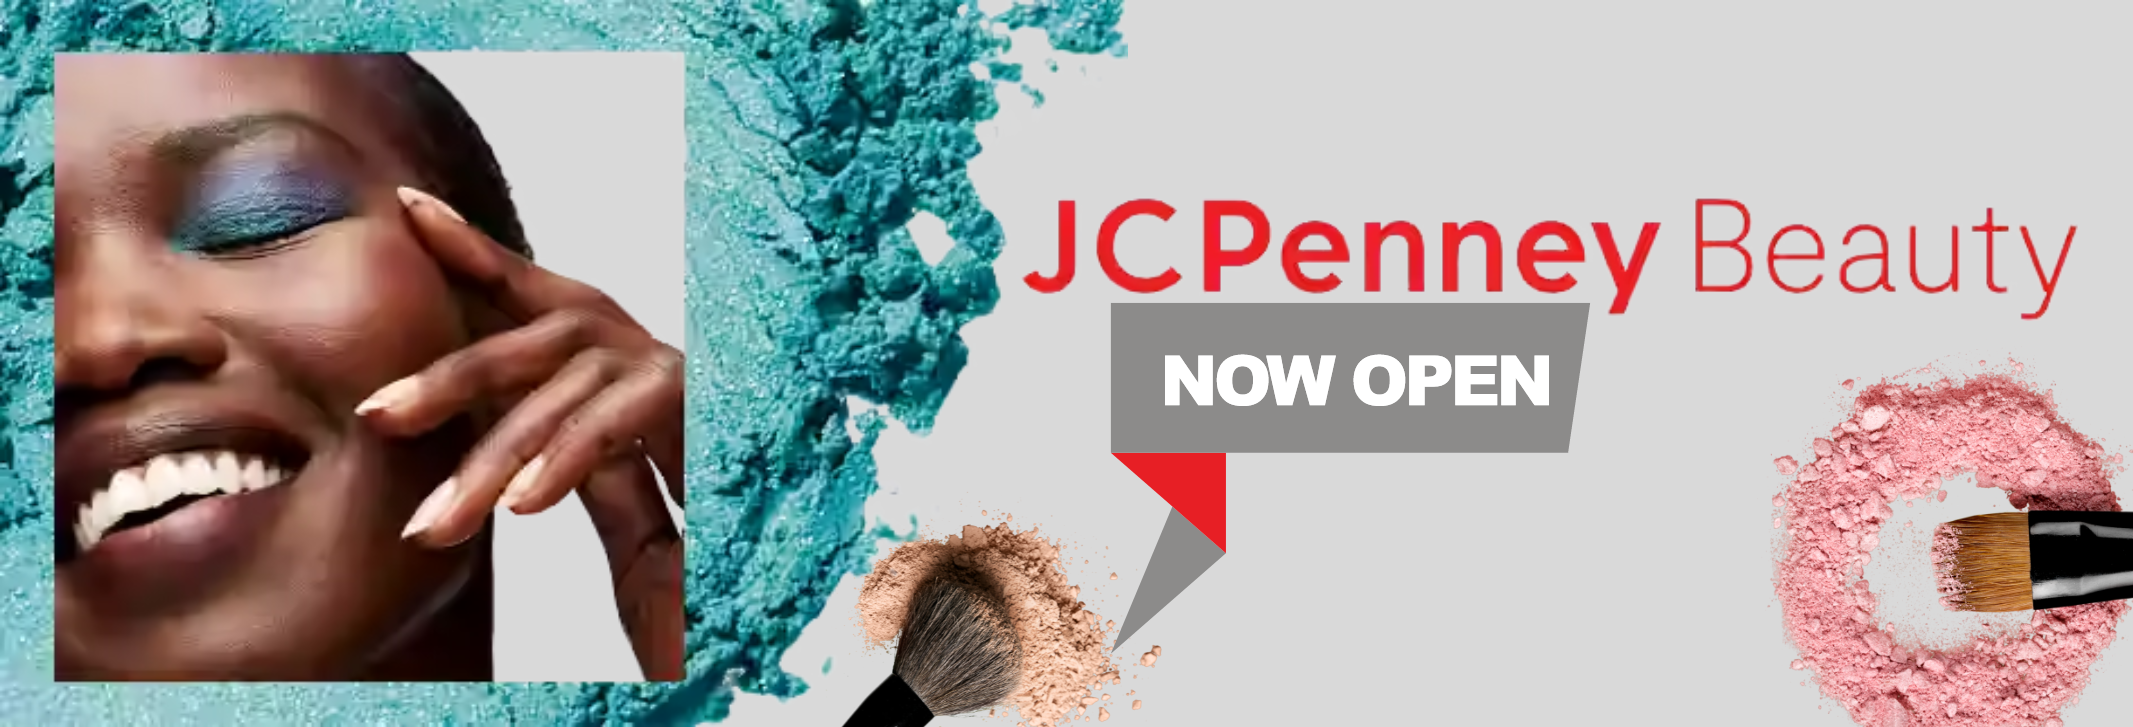 JCPenney Beauty Now Open